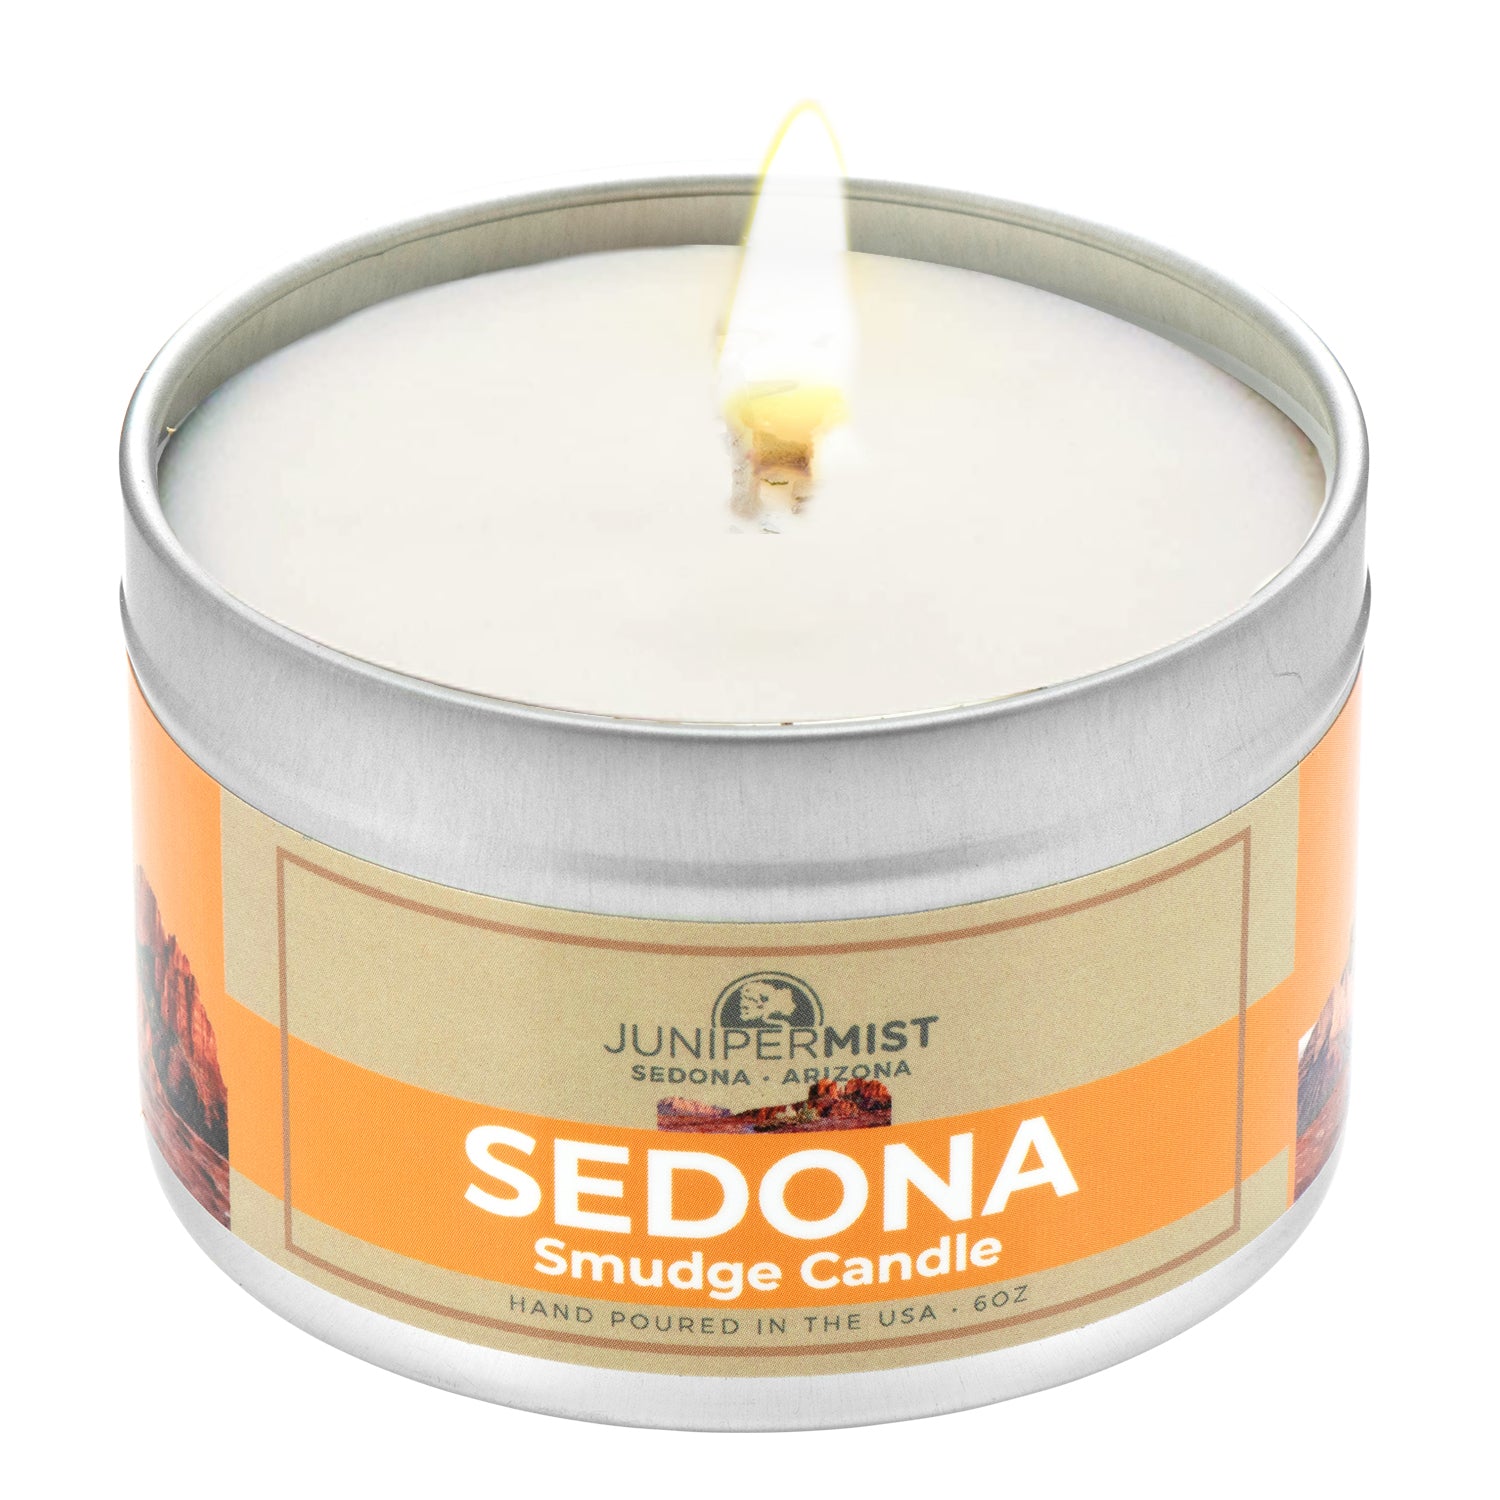 Sedona Smudge Candle